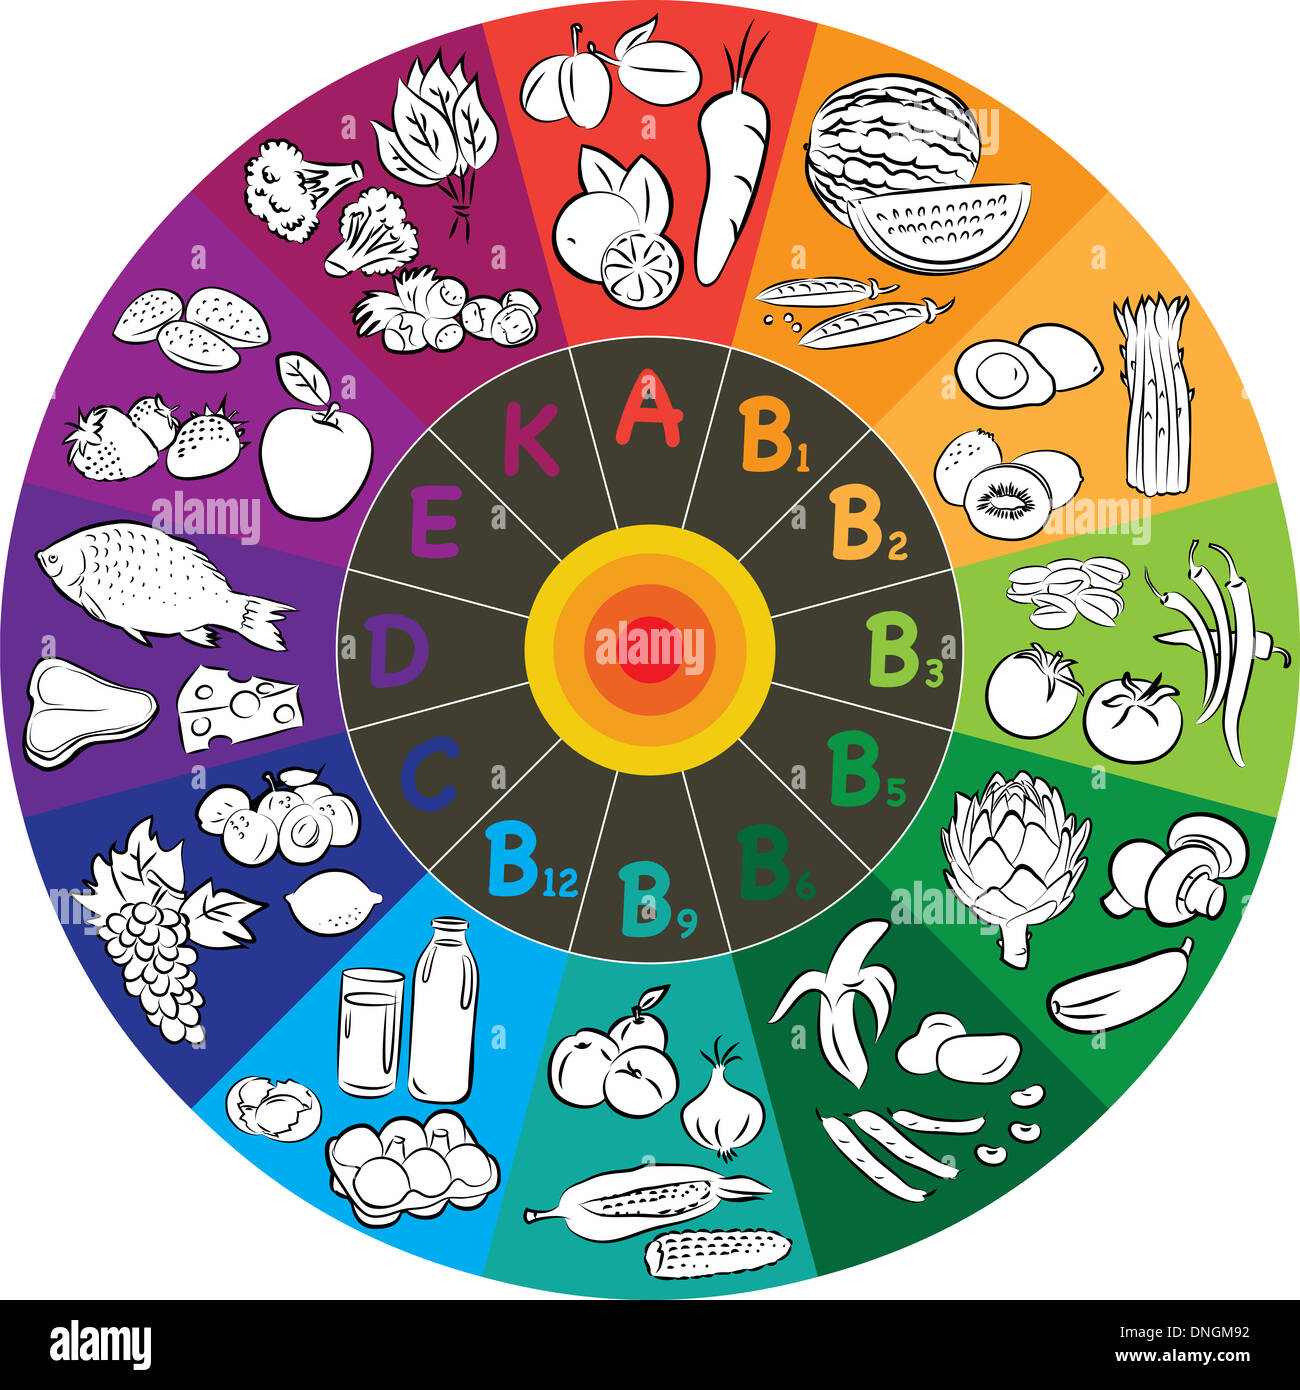 https://c8.alamy.com/comp/DNGM92/illustration-of-vitamin-groups-in-colored-wheel-DNGM92.jpg